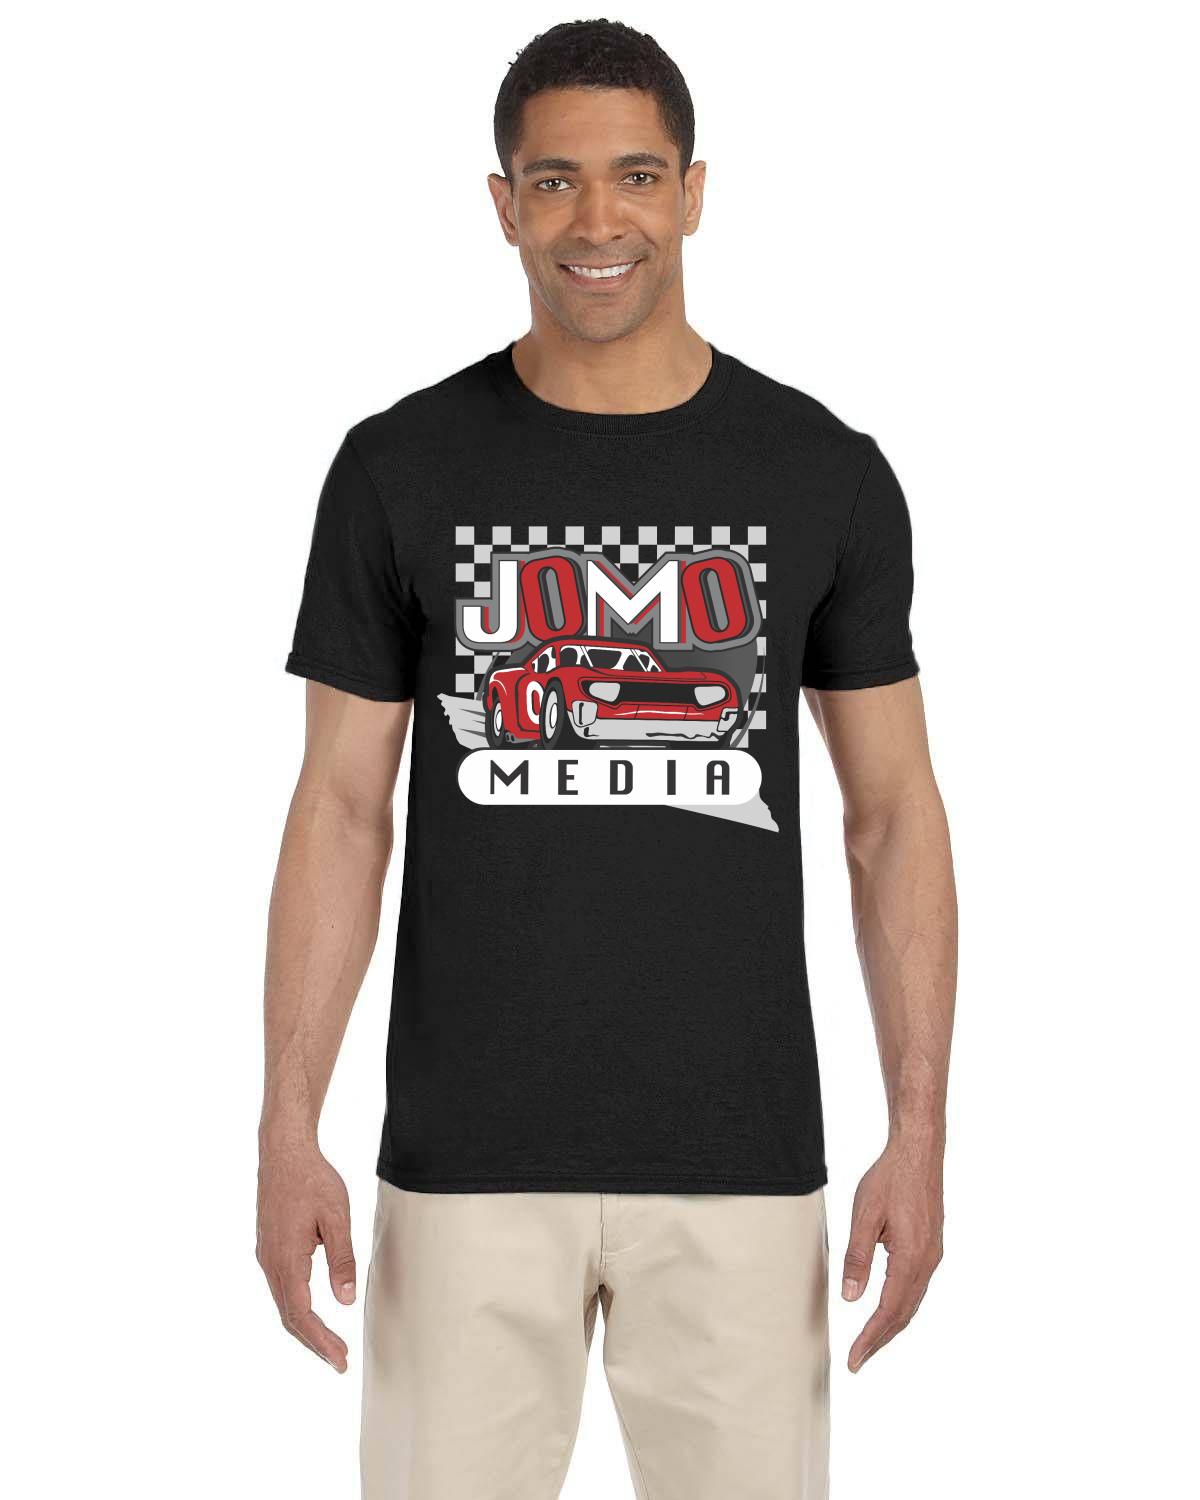 JOMO Media Men's SoftStyle tshirt